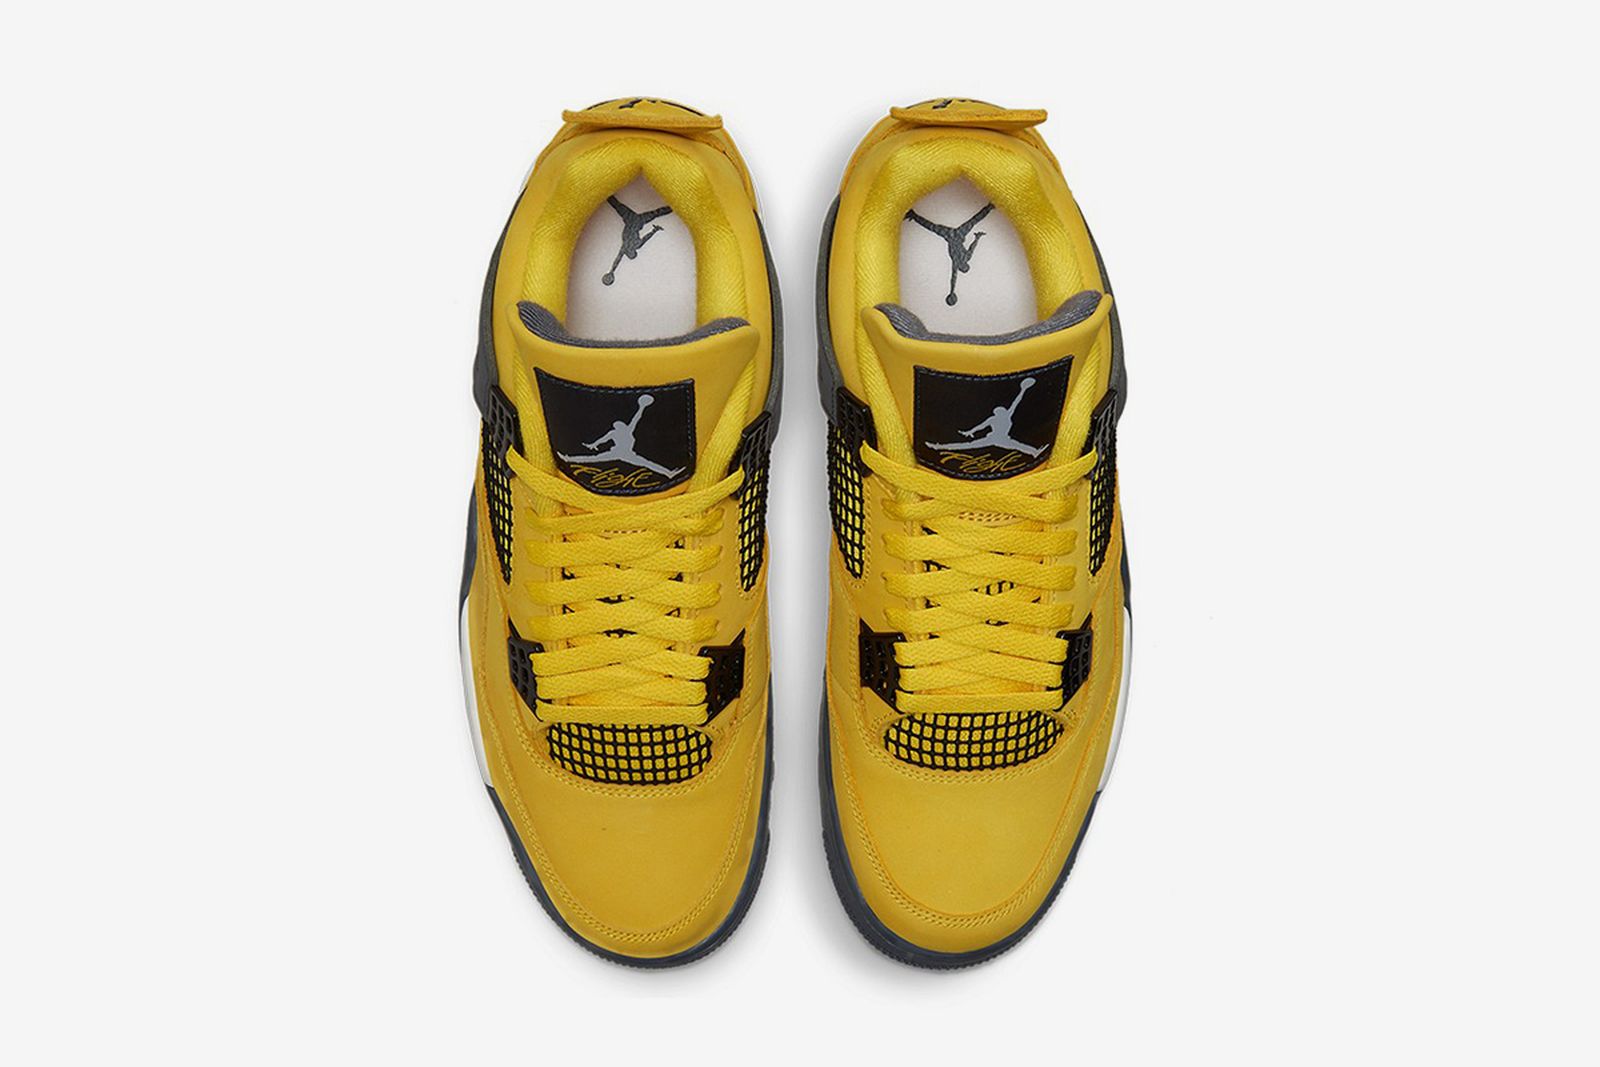 Nike Air Jordan 4 “Lightning”: Official Images  Confirmed Info